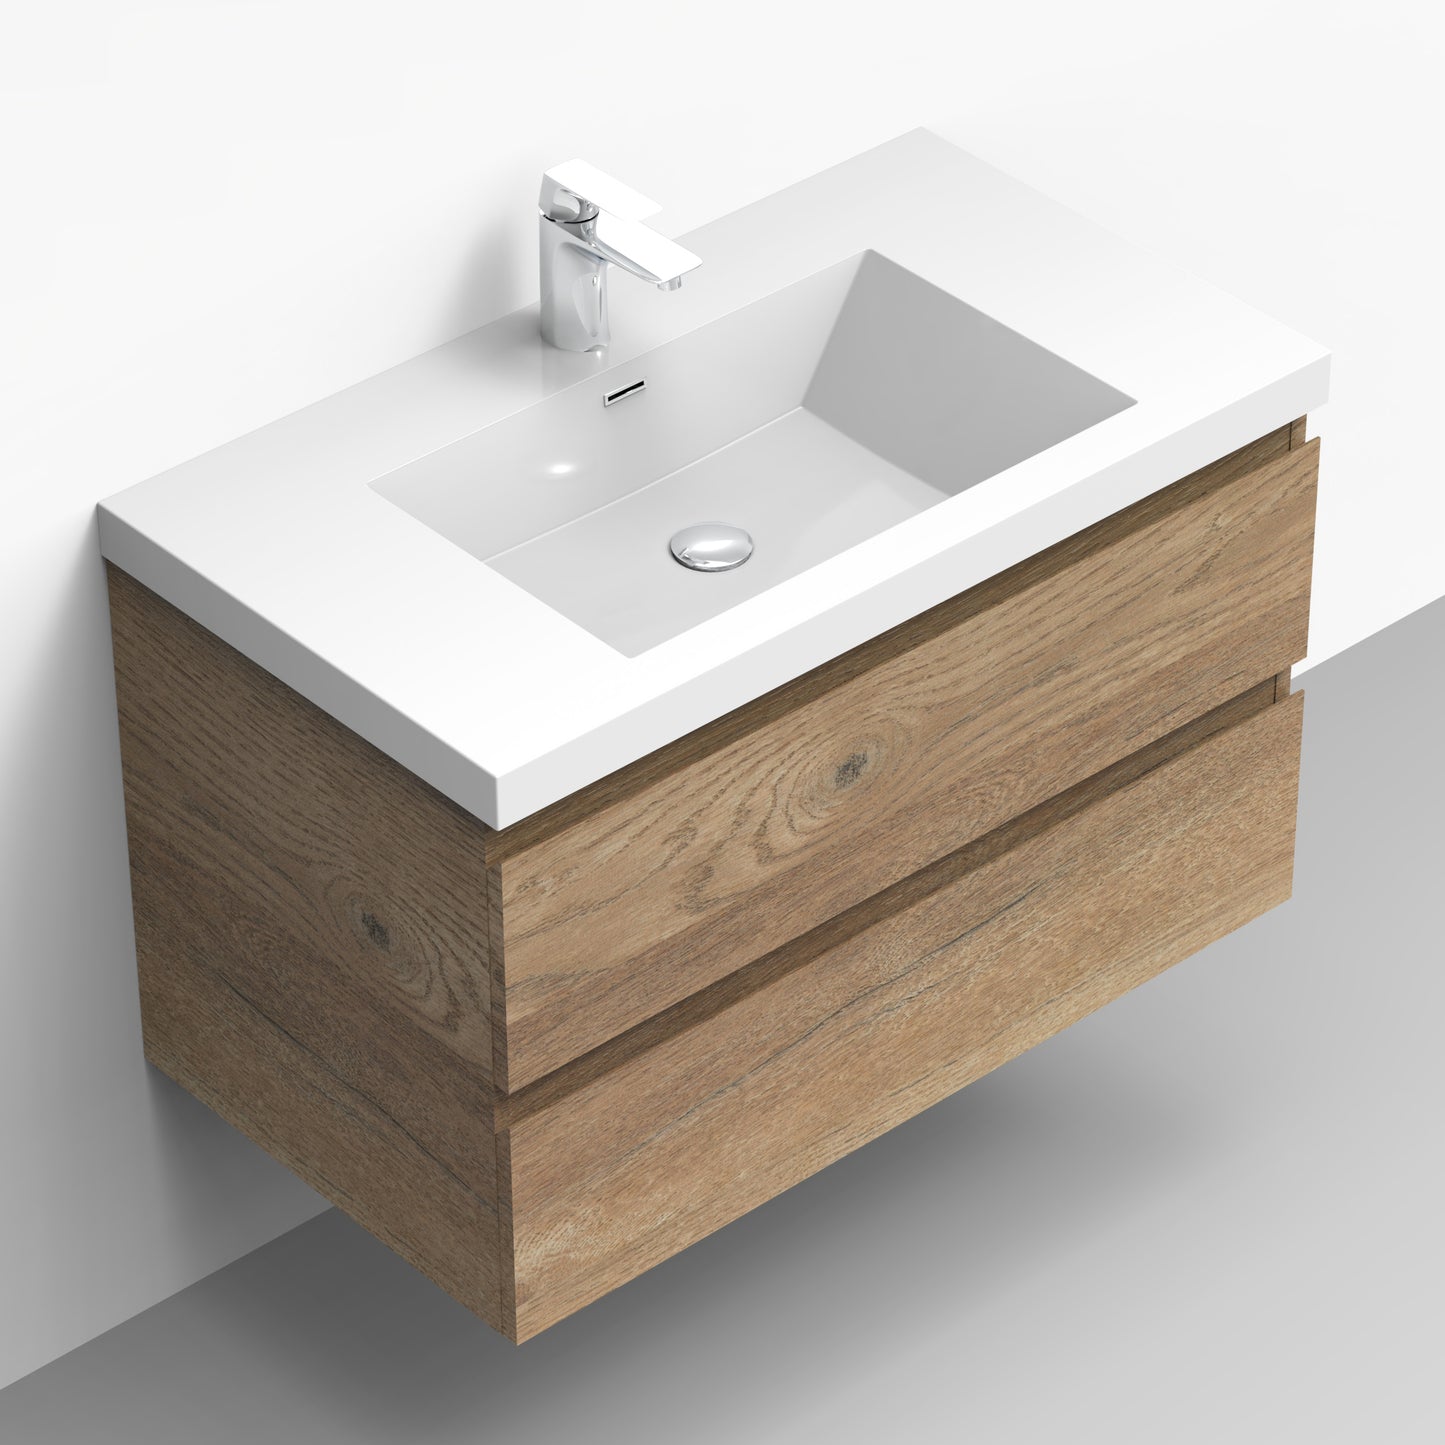 Newport Modern Design Oak Bathroom Furniture Set with Cabinet and Basin